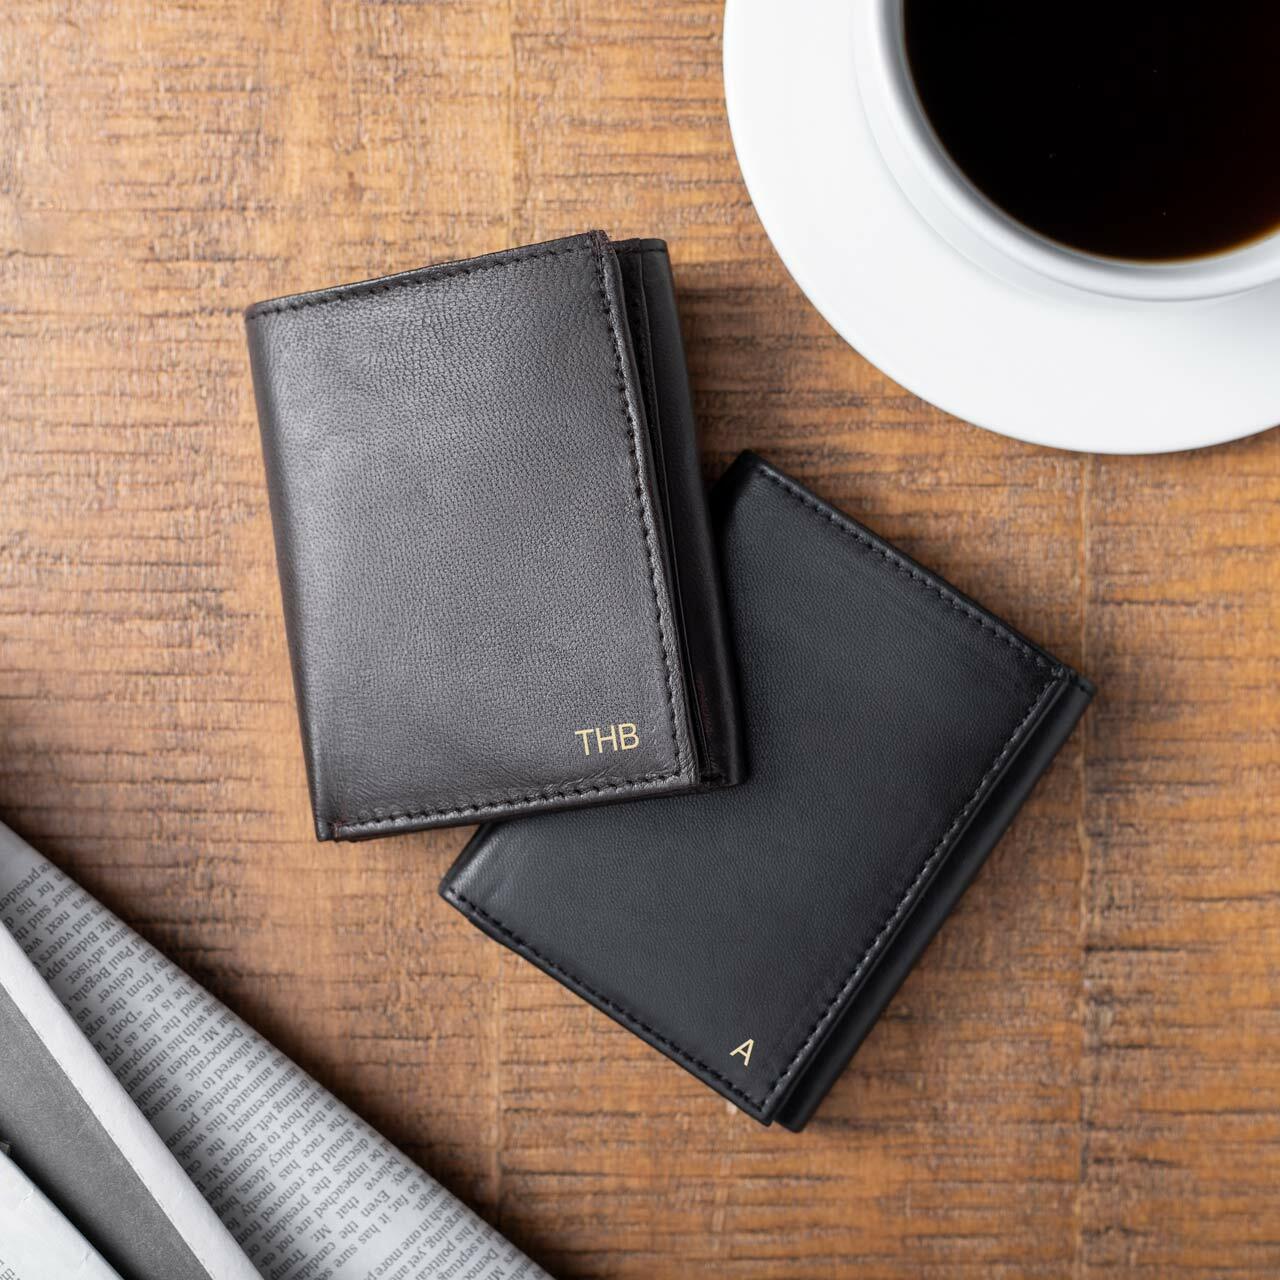 Buy Carbon Fiber Wallet Minimalist Wallet for Men, GNEBRAUTY Metal